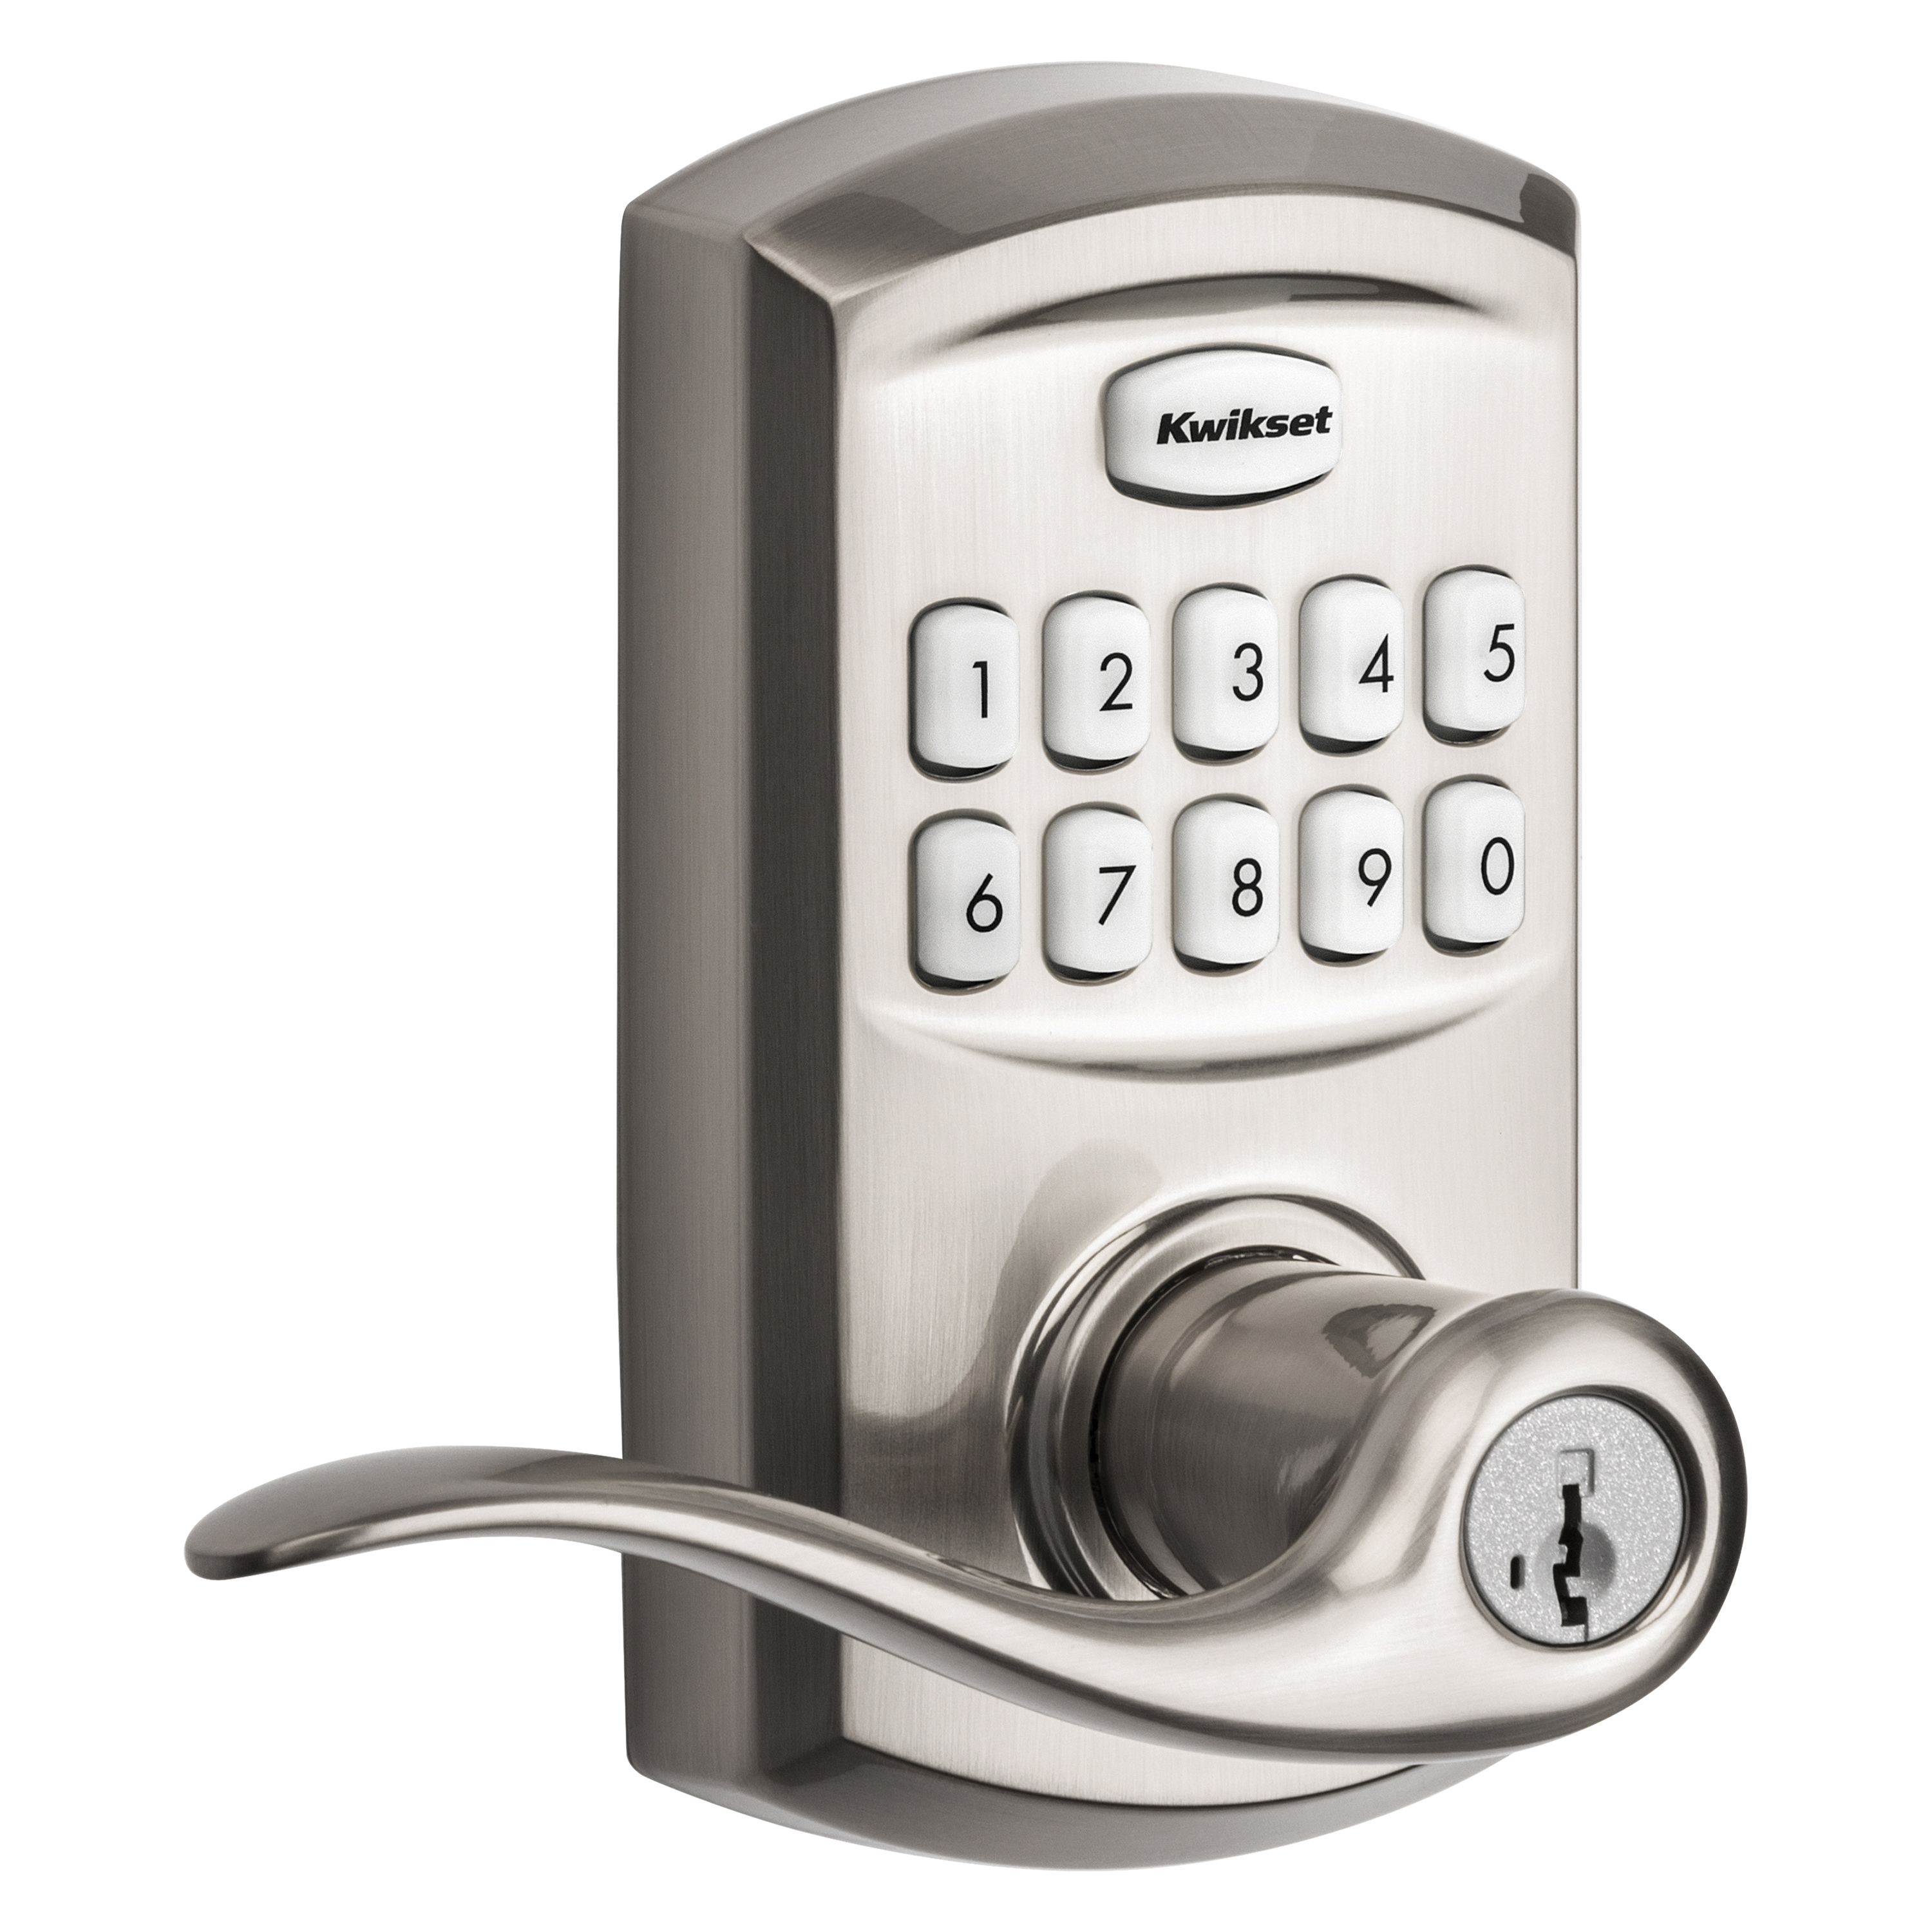 Kwikset 911TNL 15 SMT Electronic Entry Lock, Satin Nickel, Residential, AAA Grade, Metal, Universal Hand